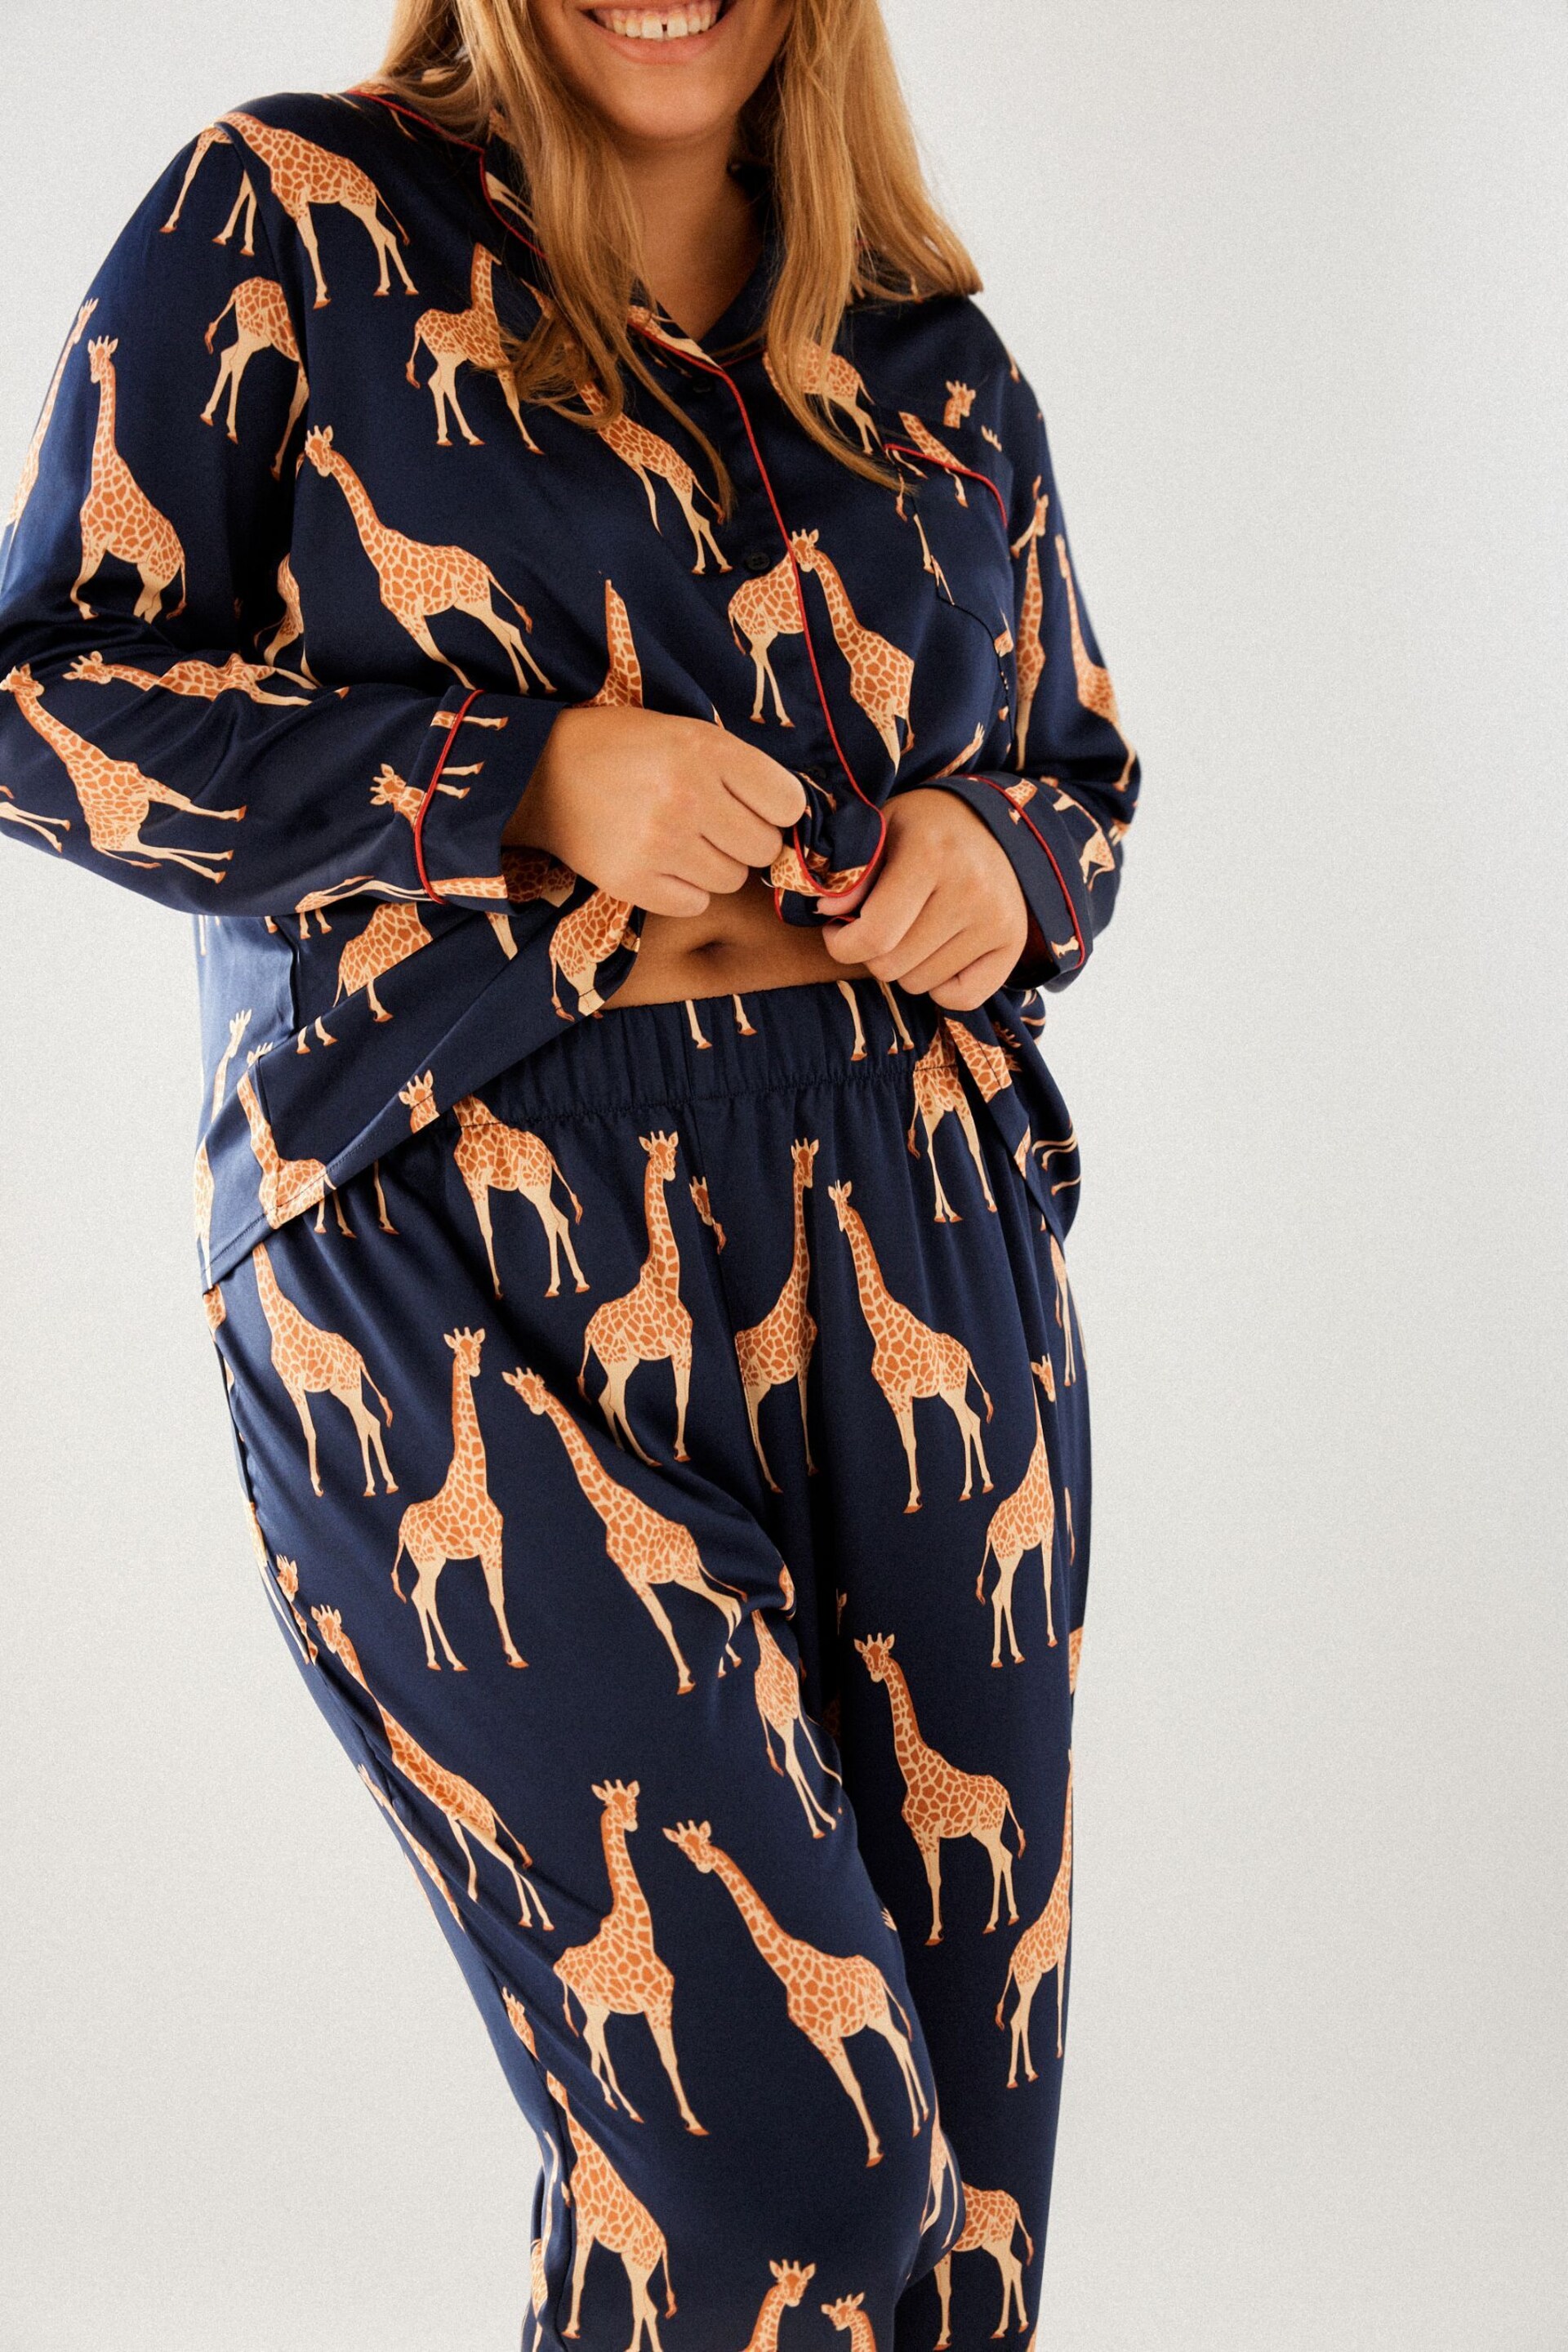 Chelsea Peers Blue Curve Satin Button Up Long Pyjamas Set - Image 2 of 5